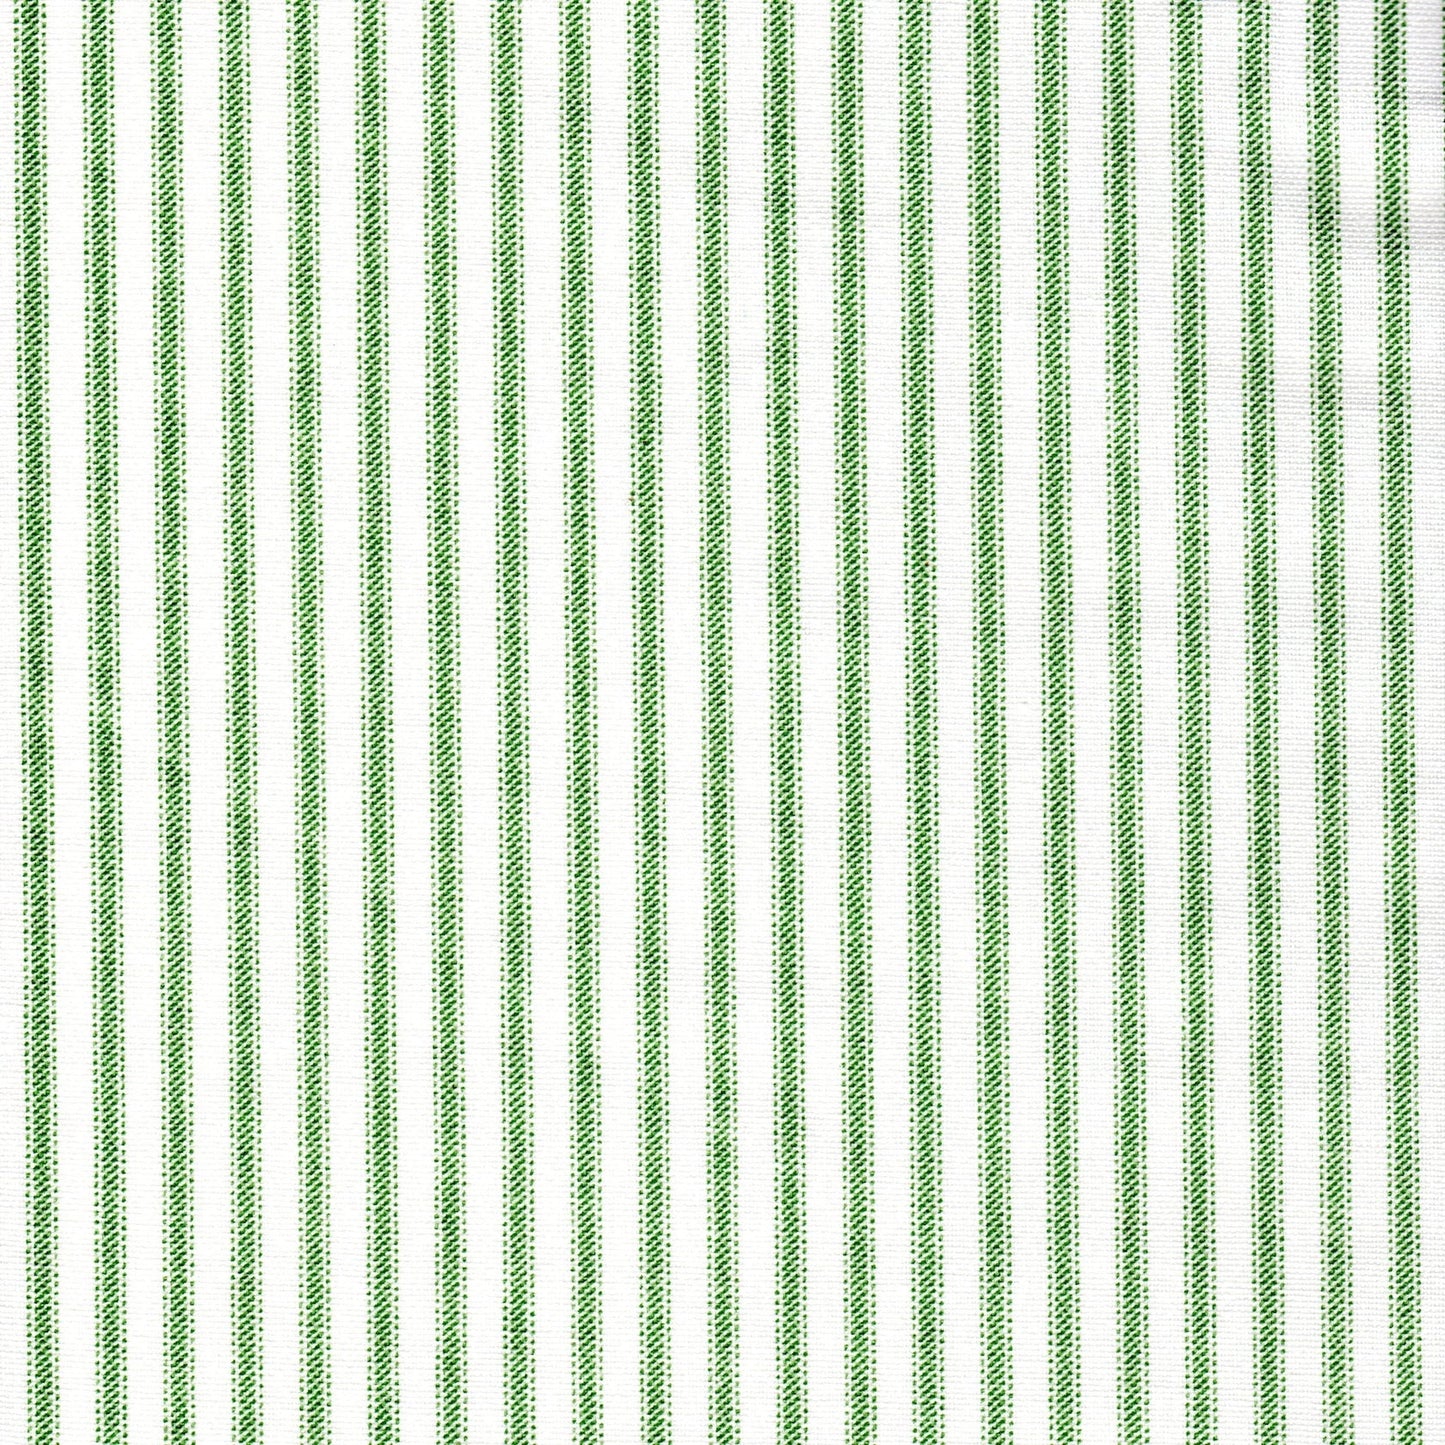 gathered crib skirt in Classic Pine Green Ticking Stripe on White